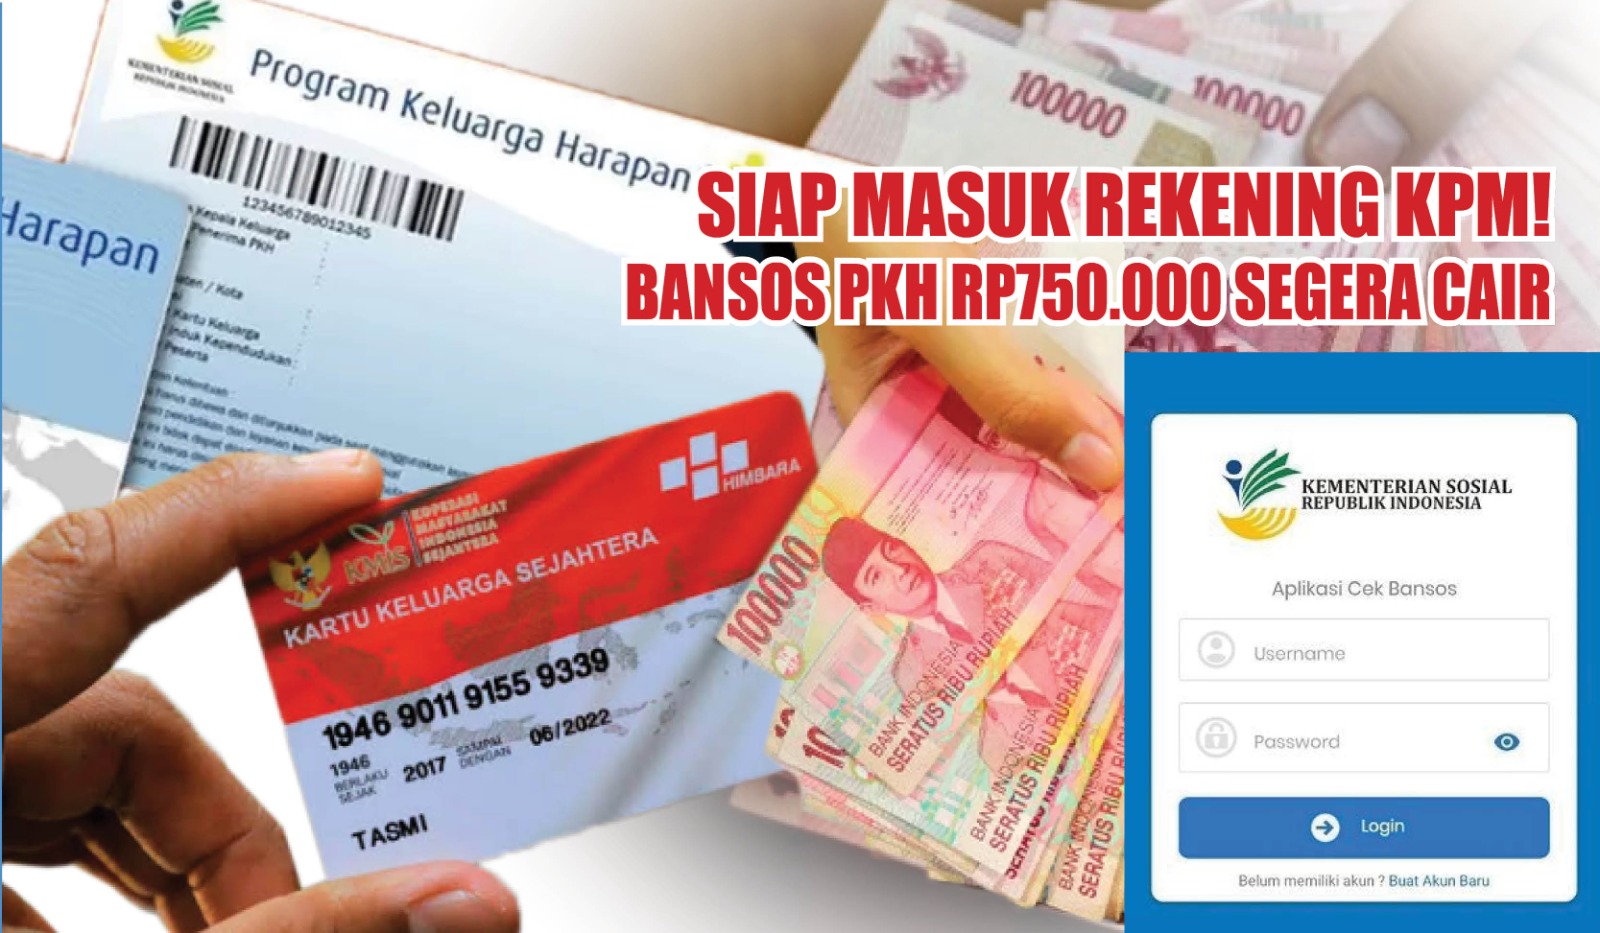 Siap Masuk Rekening KPM! Bansos PKH Rp750.000 Segera Cair 